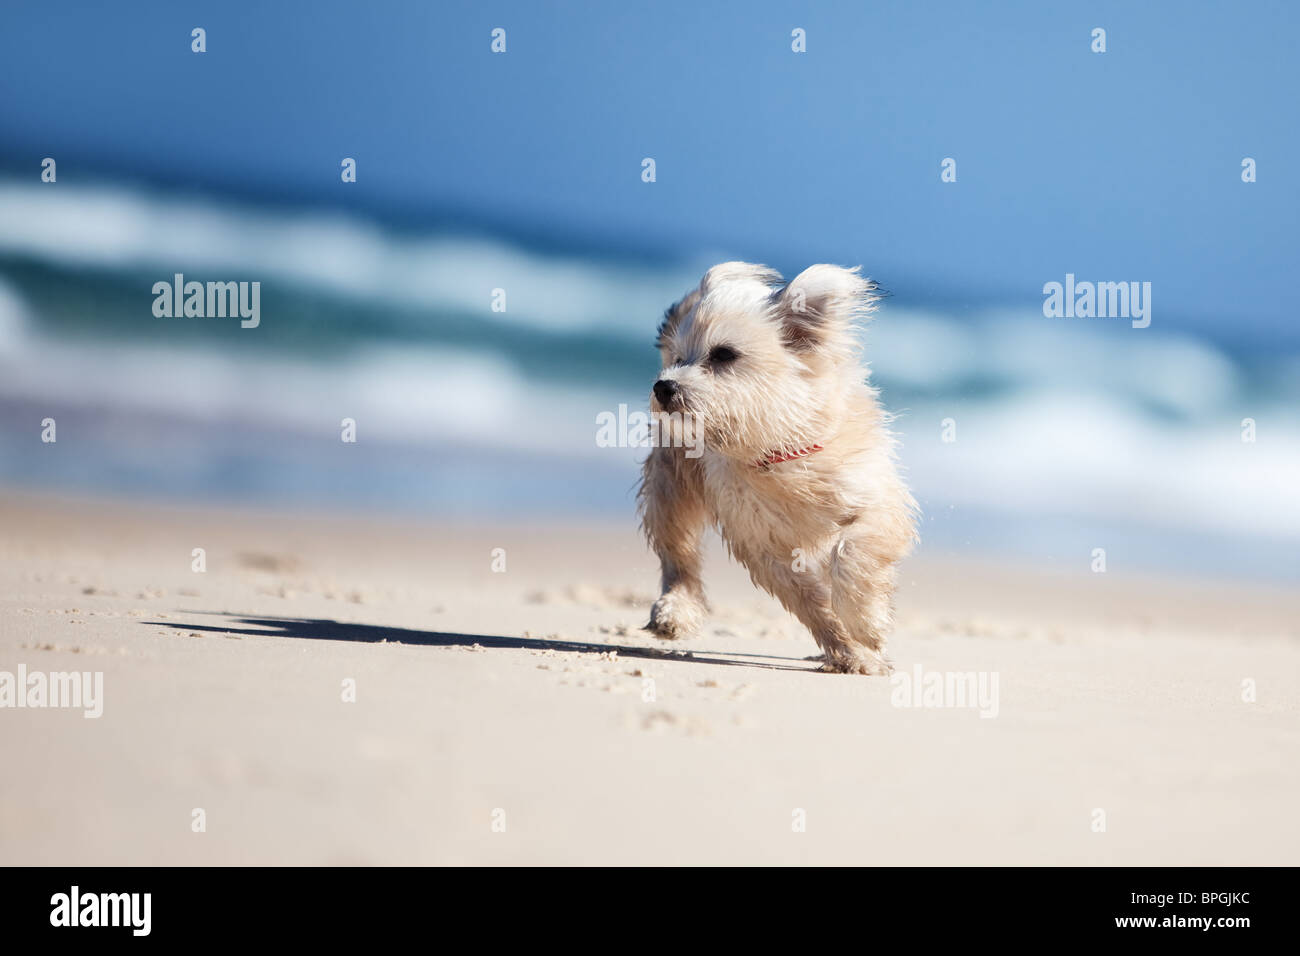 Piccolo cute cane in esecuzione su di una spiaggia di sabbia bianca Foto Stock